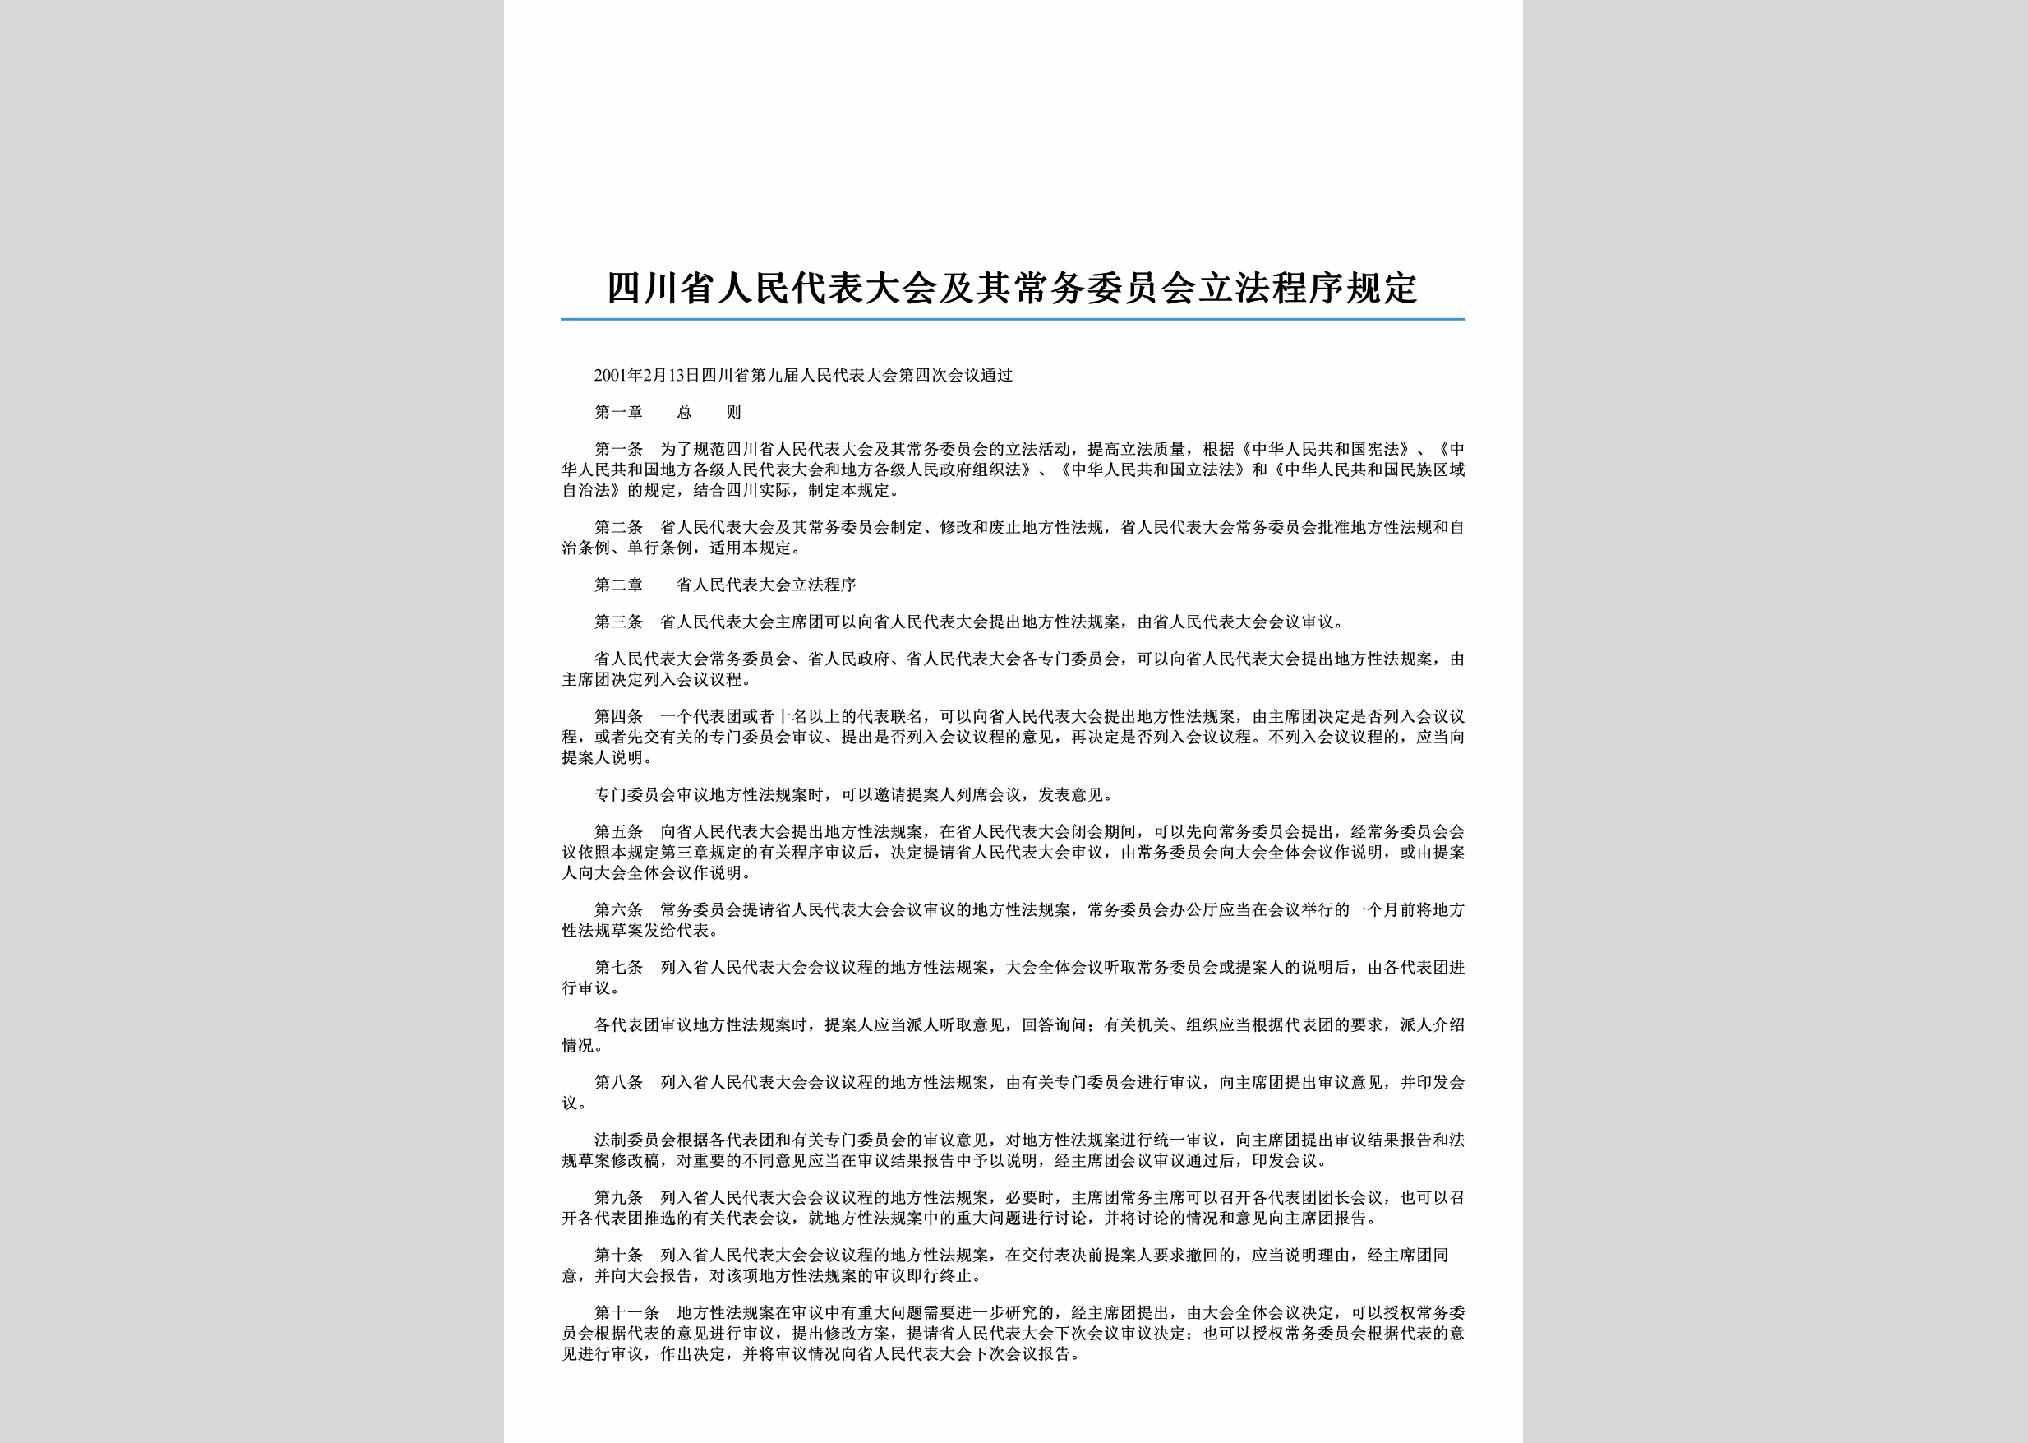 SC-DBDHLFGD-2006：四川省人民代表大会及其常务委员会立法程序规定